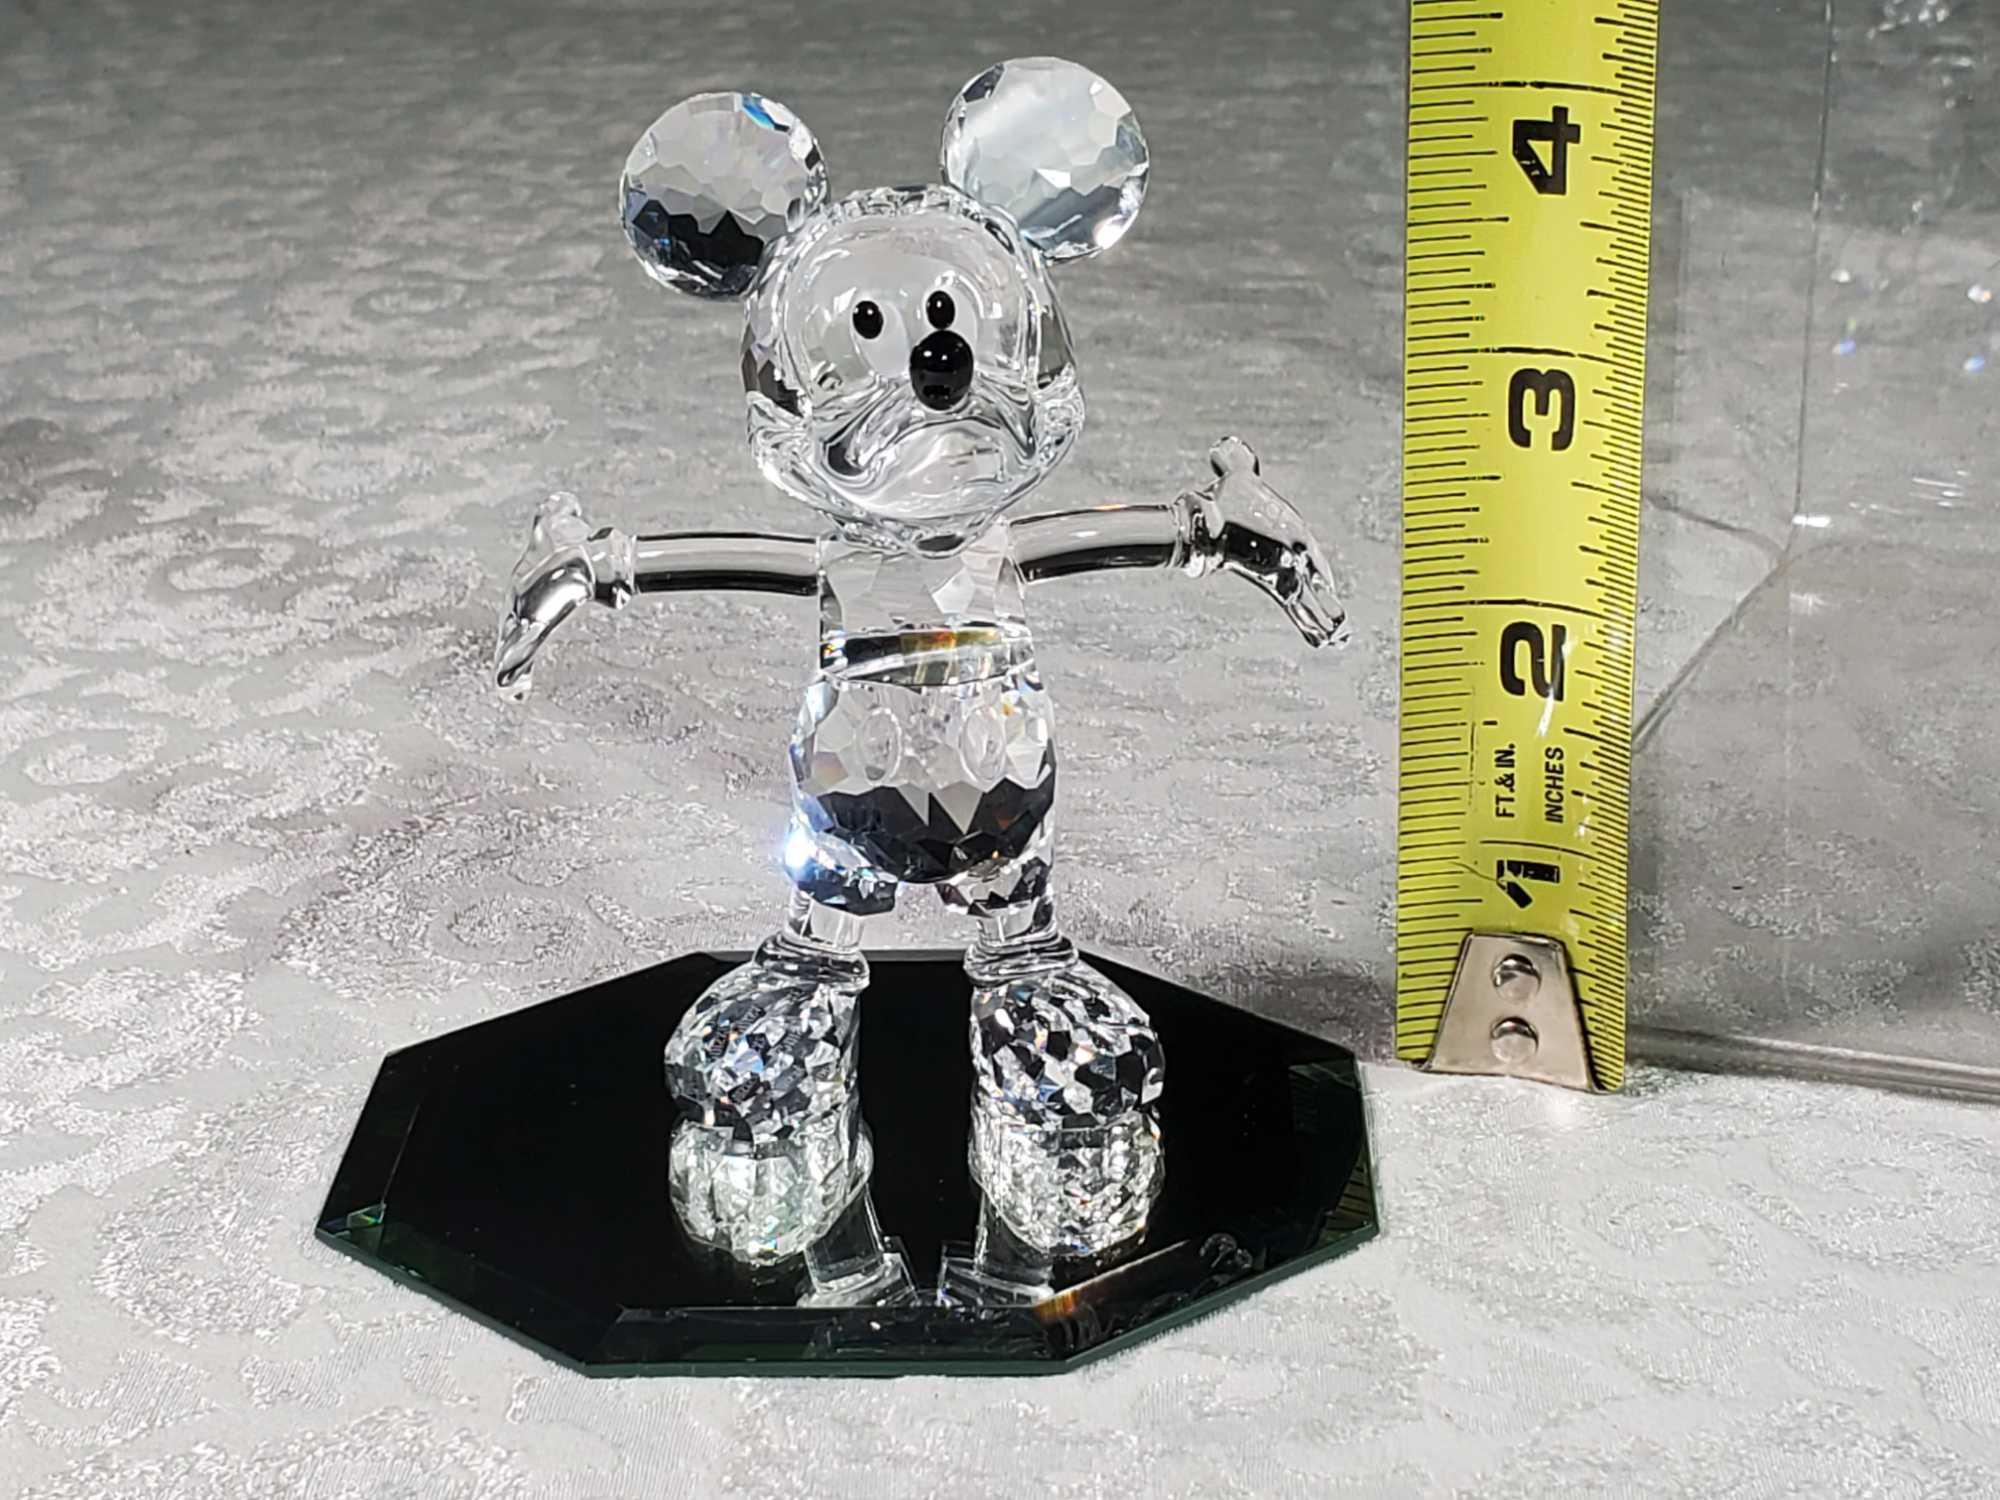 Mickey Mouse & More Swarovski Figurine in Boxes